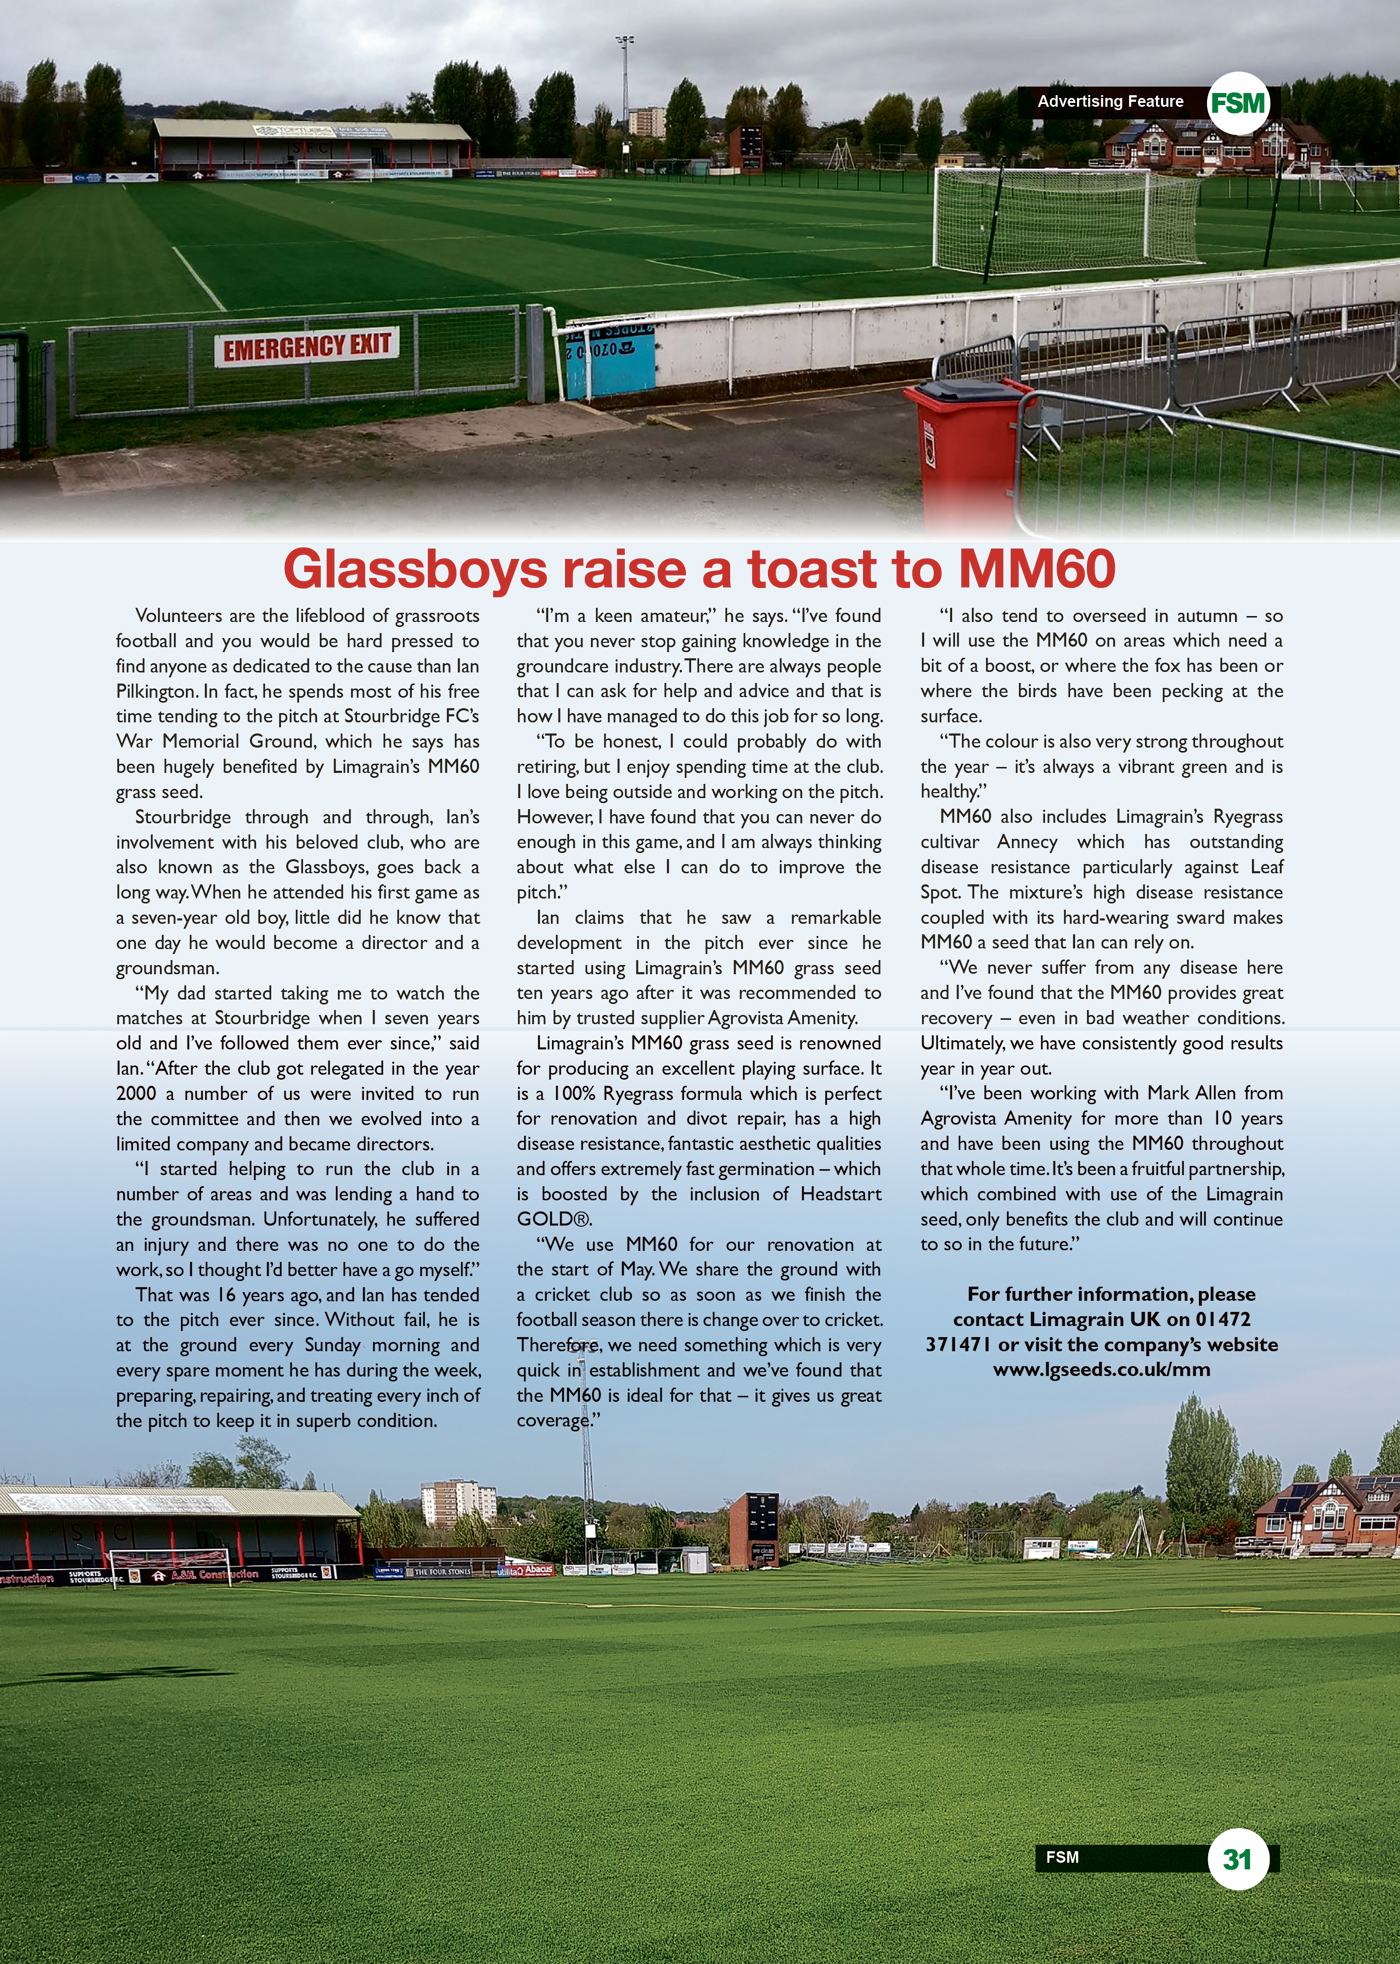 Glassboys Raise A Toast To MM60